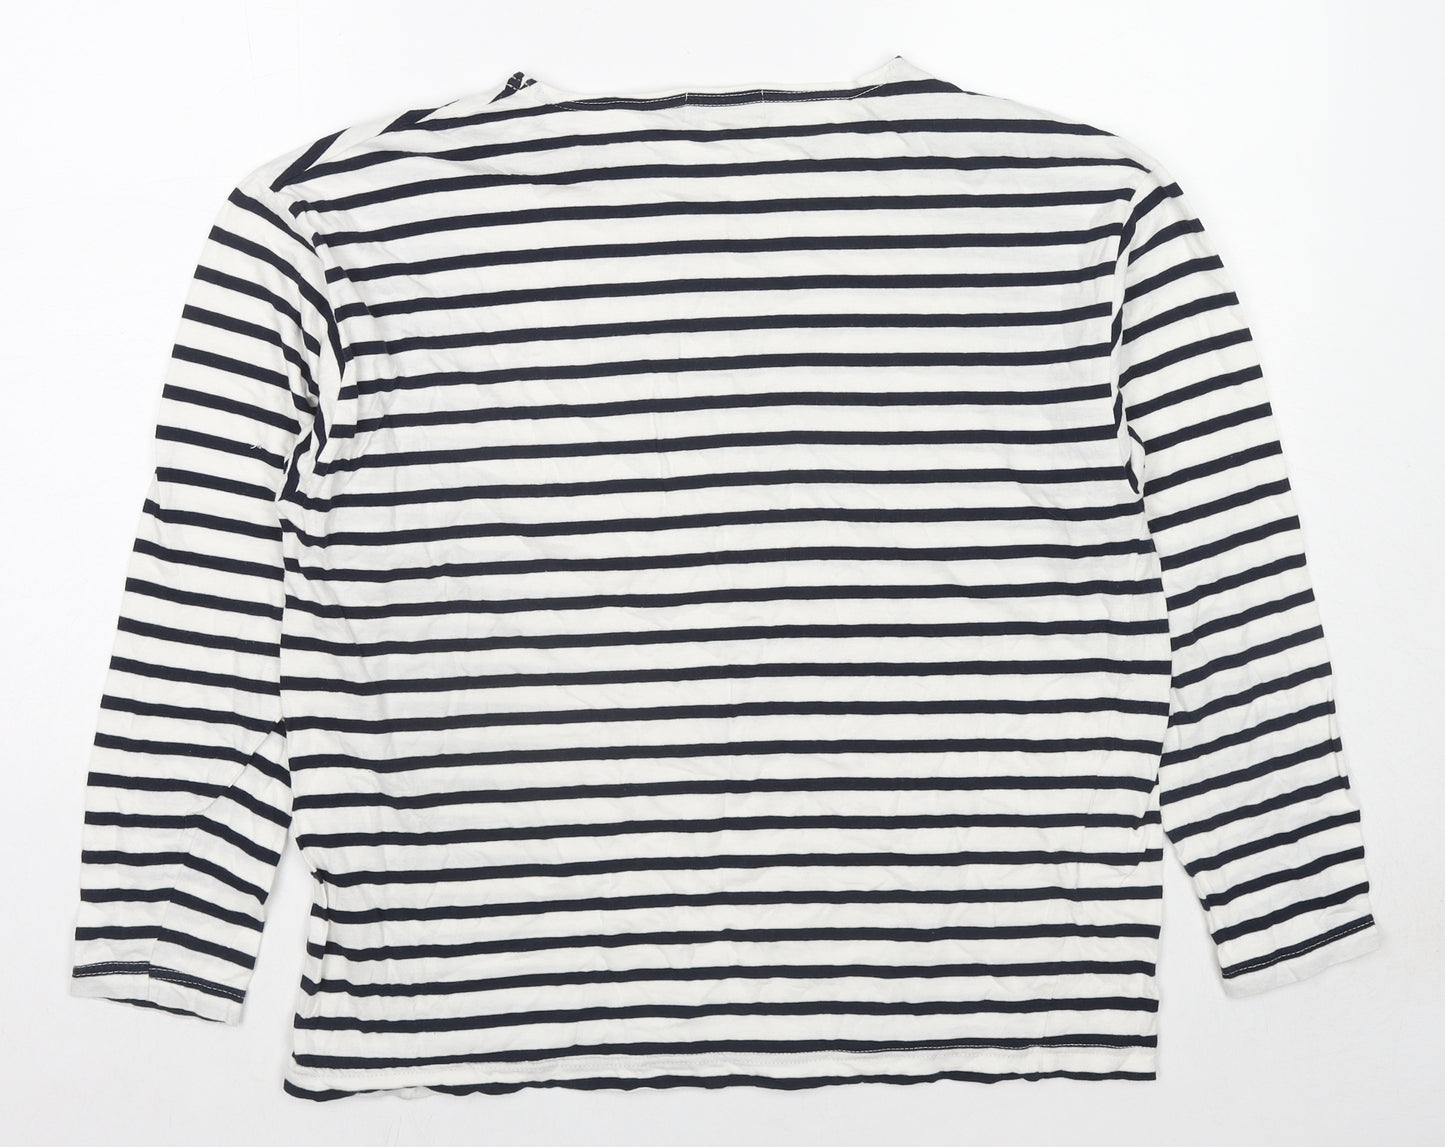 Quai V Womens Multicoloured Striped Cotton Basic T-Shirt Size 2XL Round Neck